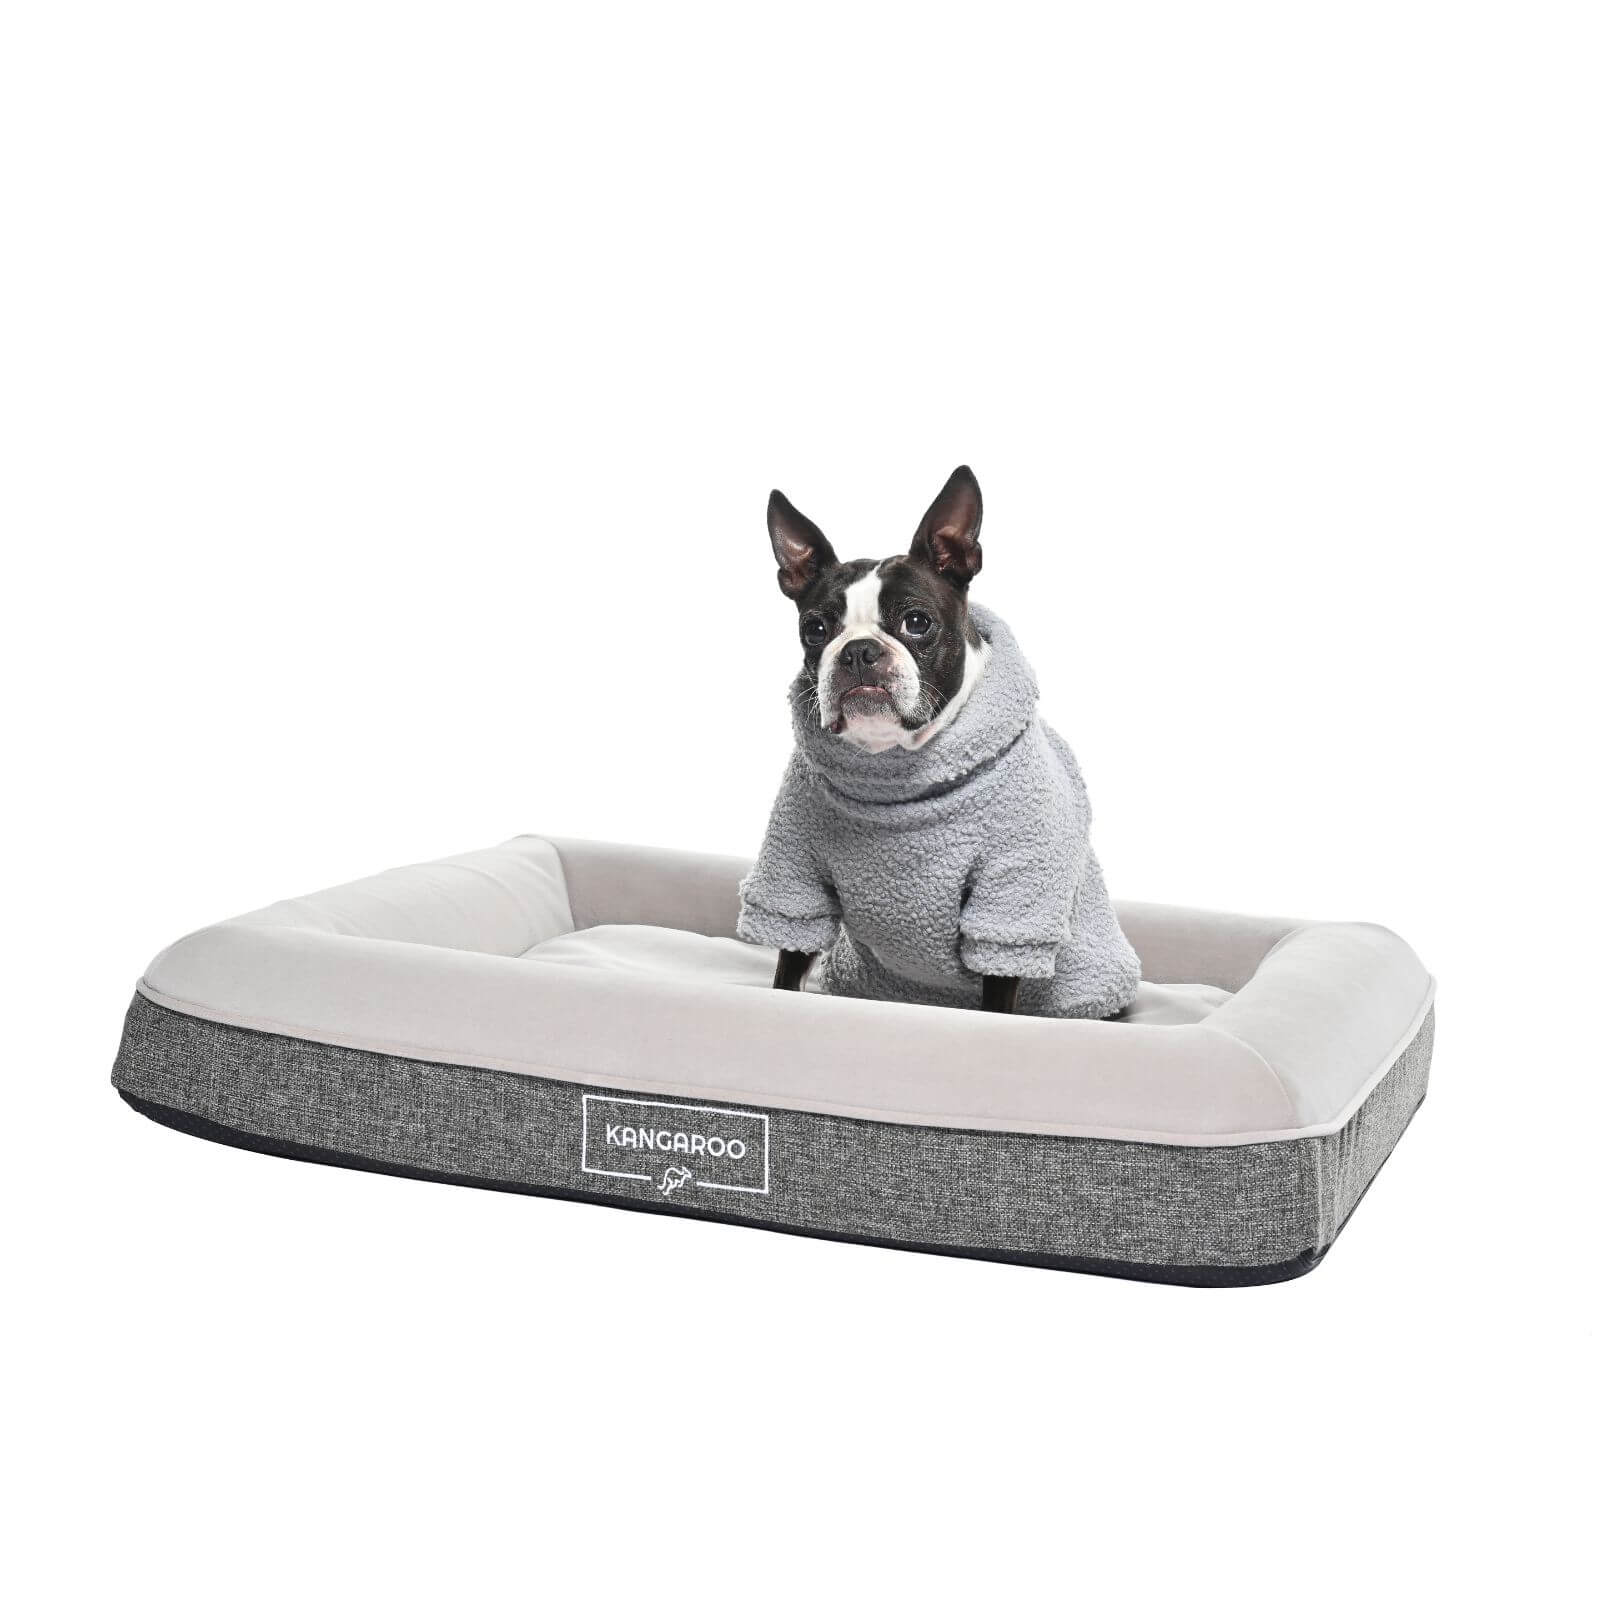 Kangaroo Bed - Australia's comfiest dog bed